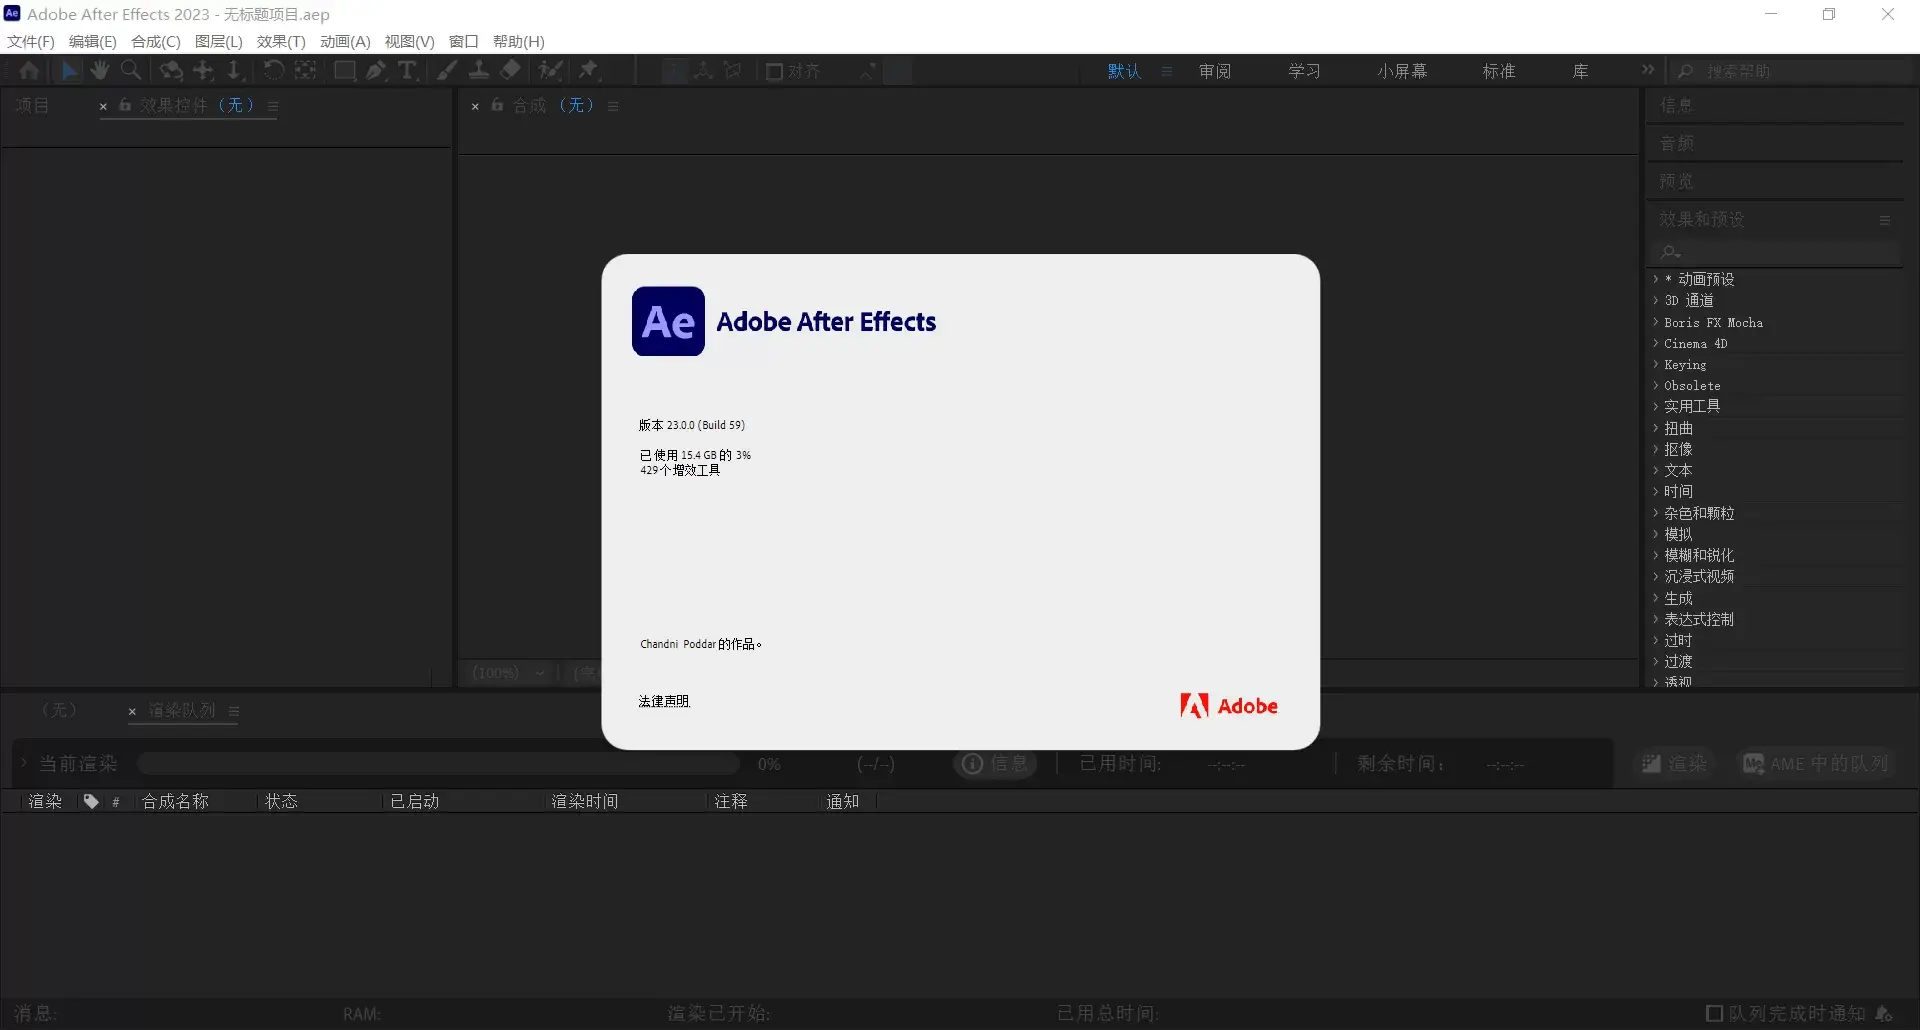 Adobe After Effects 2023 (23.0.0.59) 特别版